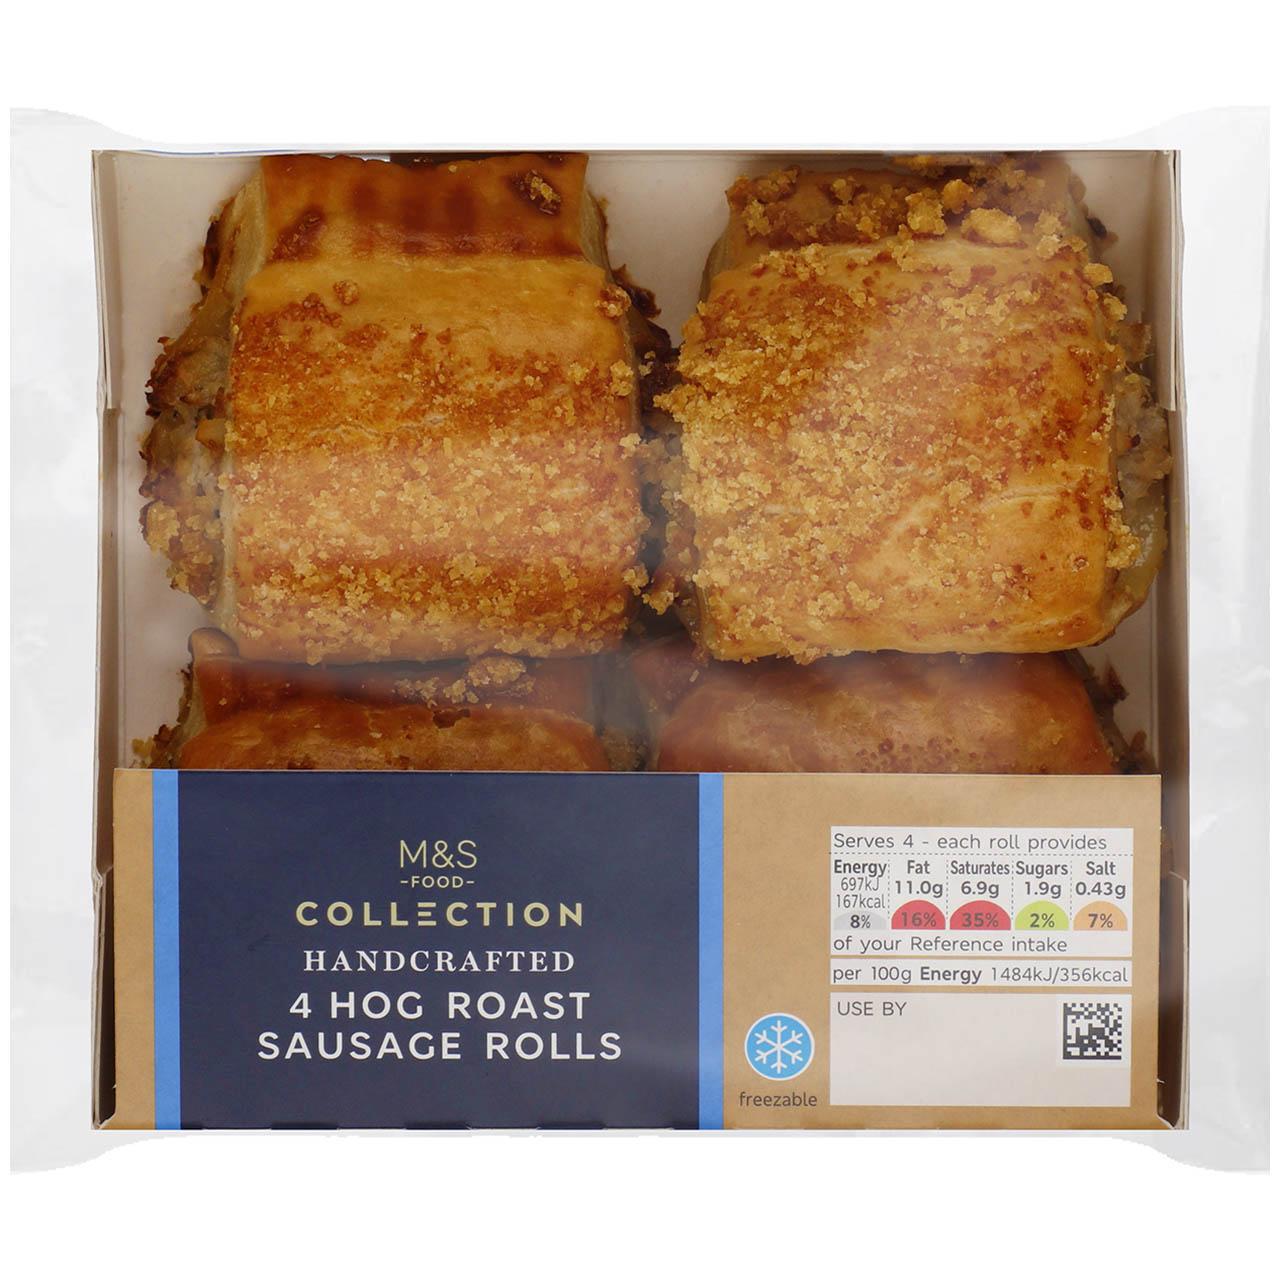 M&S Collection Hog Roast Sausage Rolls 4 per pack